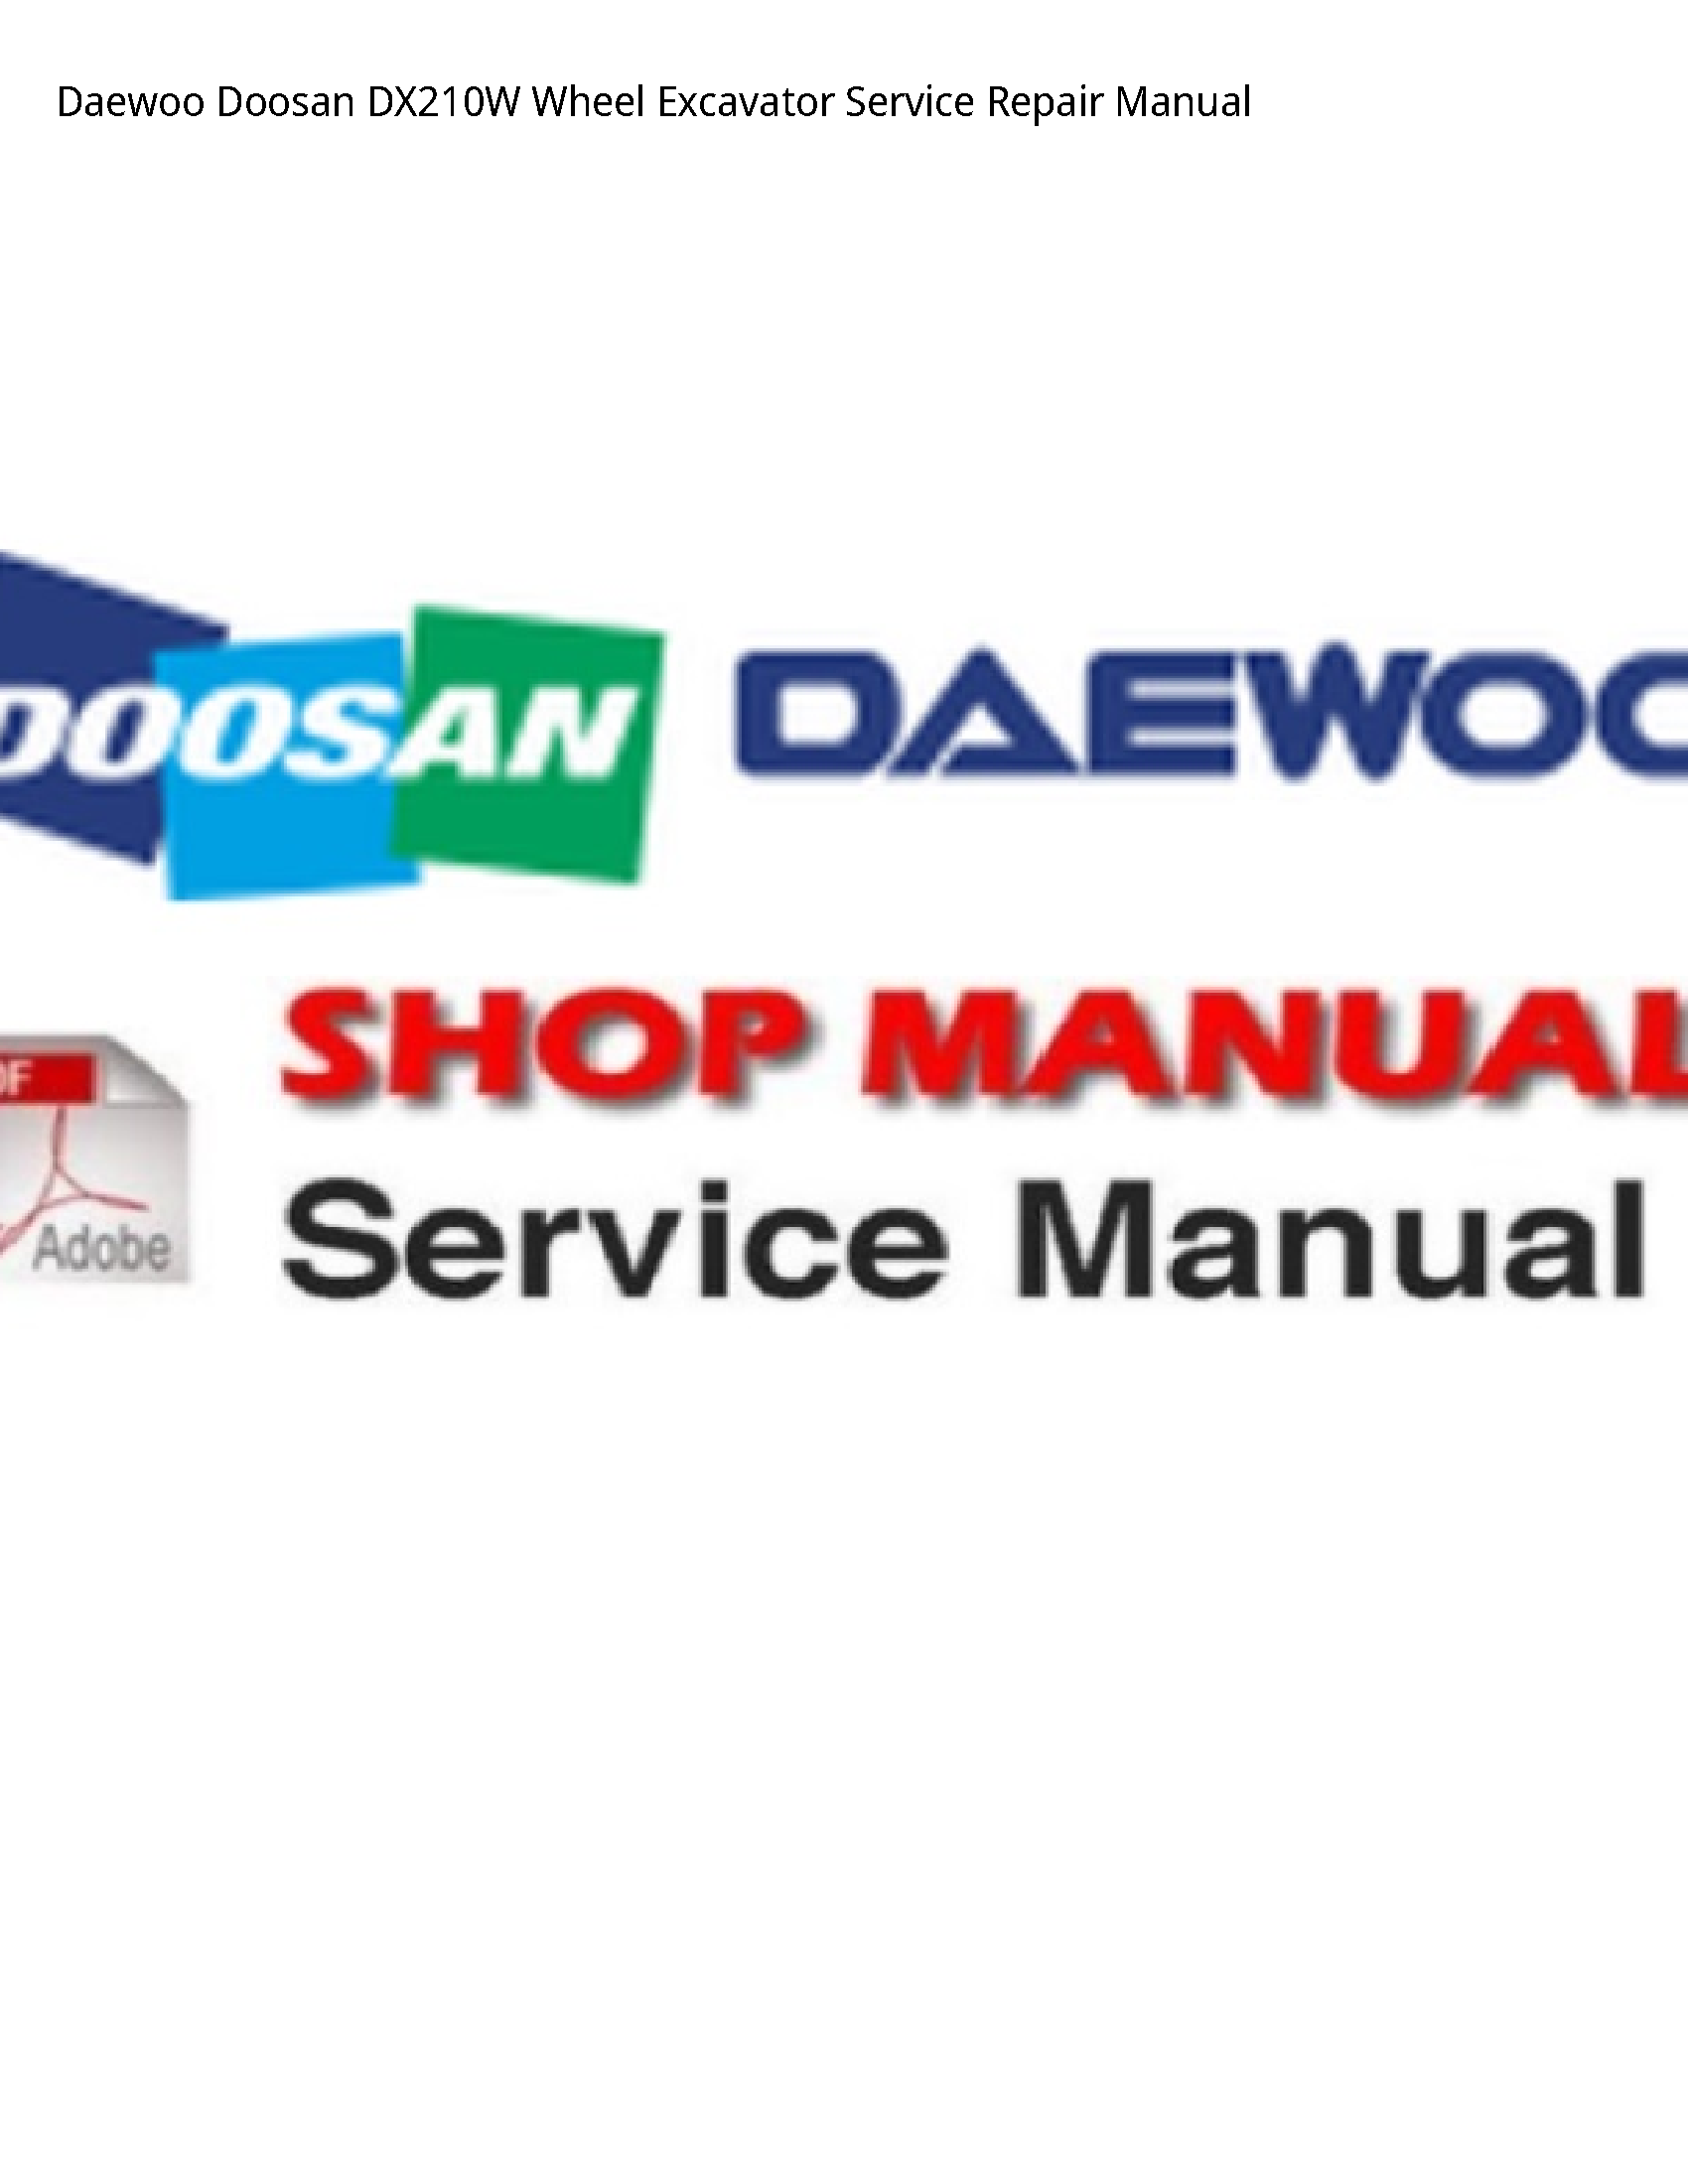 Daewoo Doosan DX210W Wheel Excavator manual